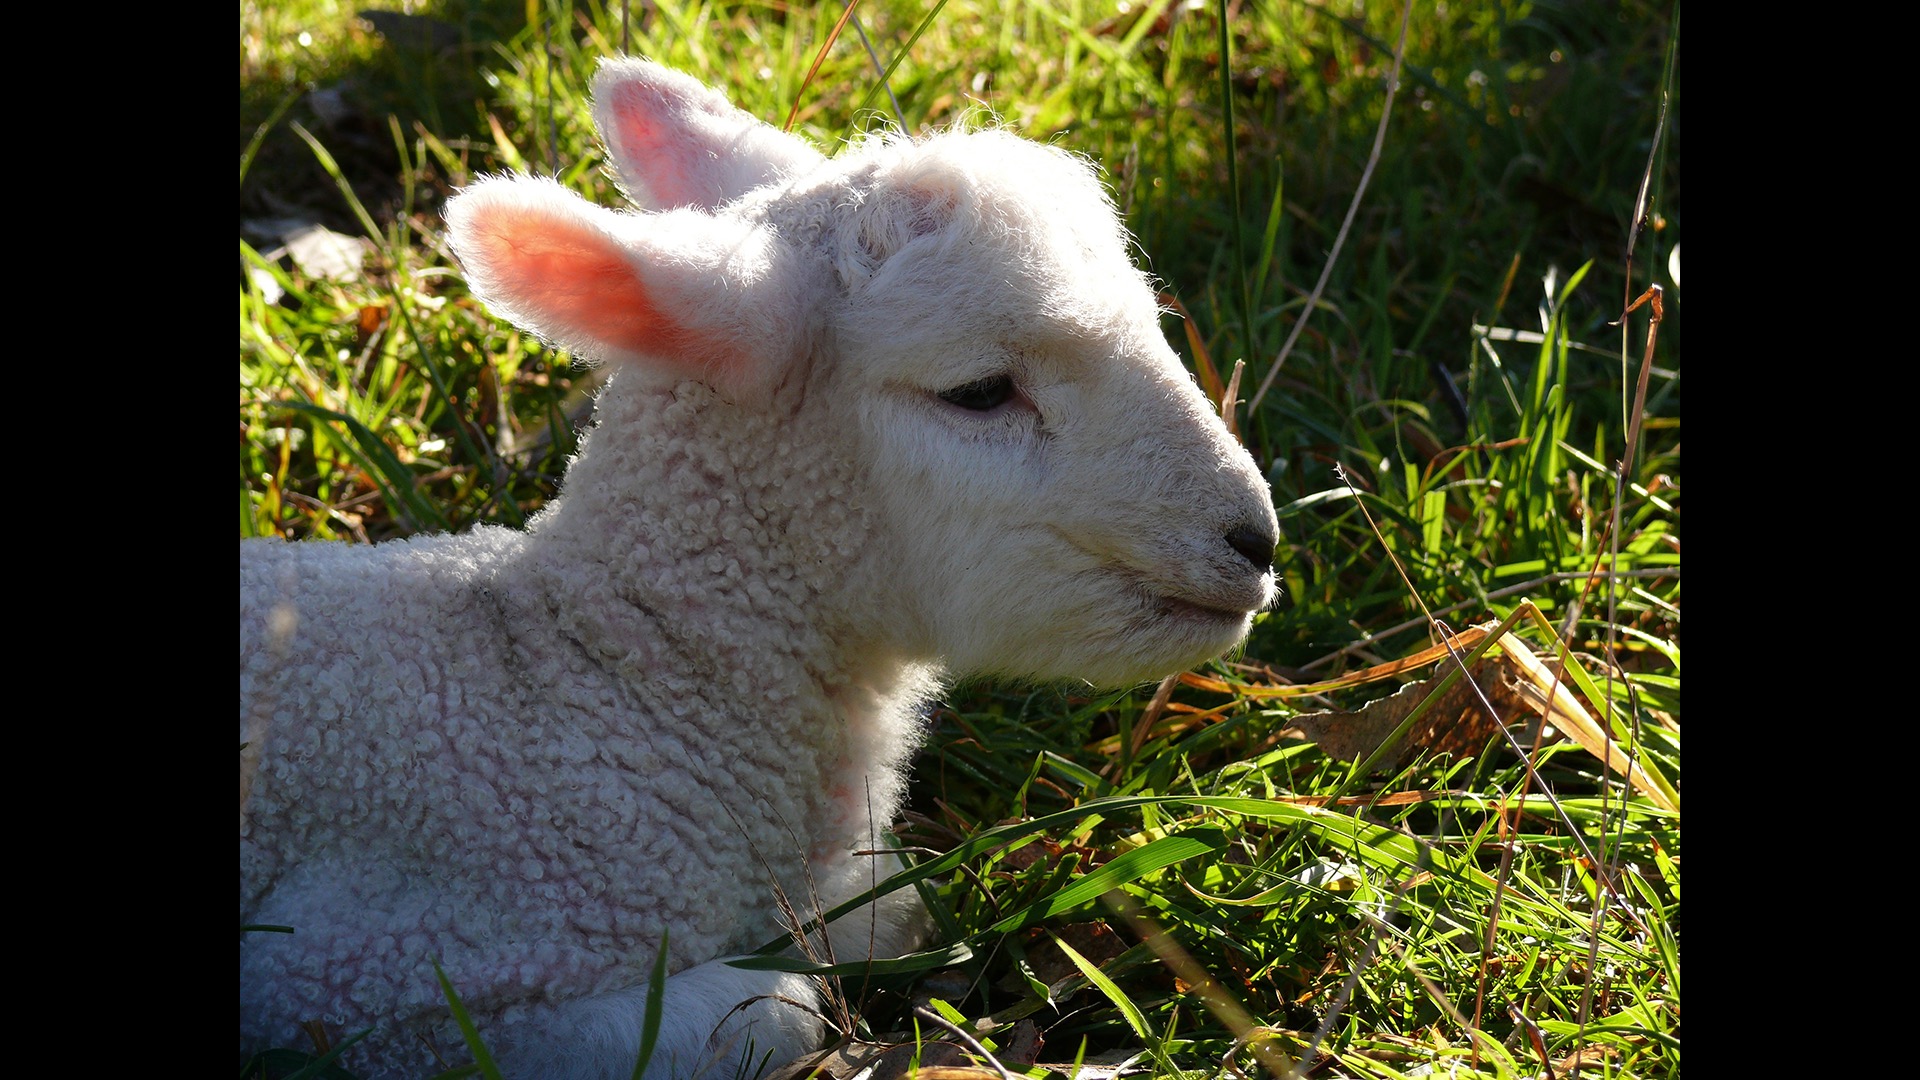 lamb lying down